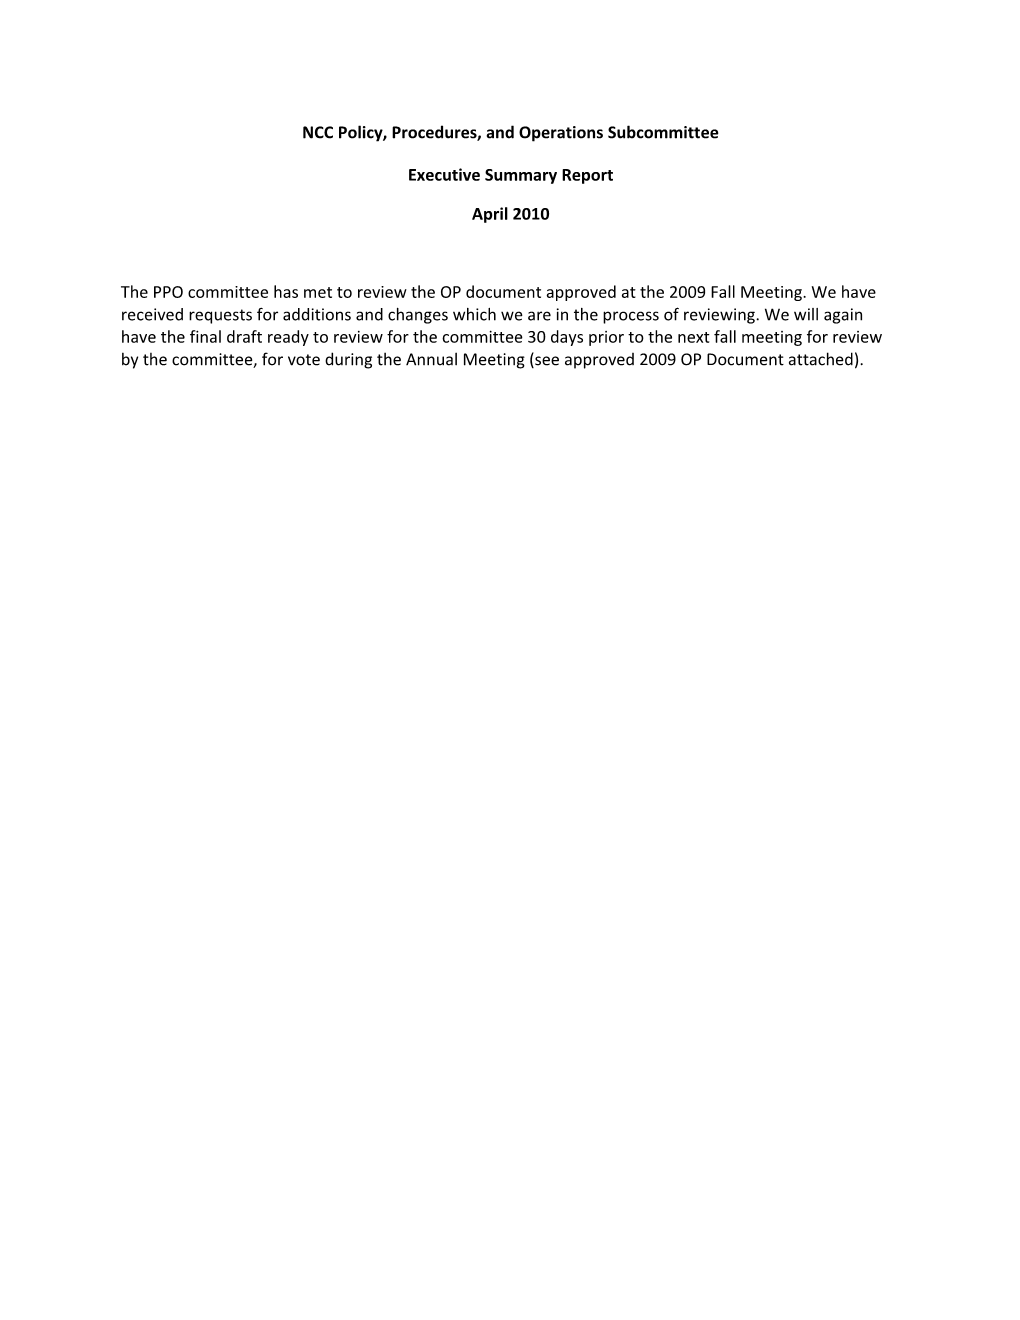 NCC-PPO Executive Summary Report - April 2010